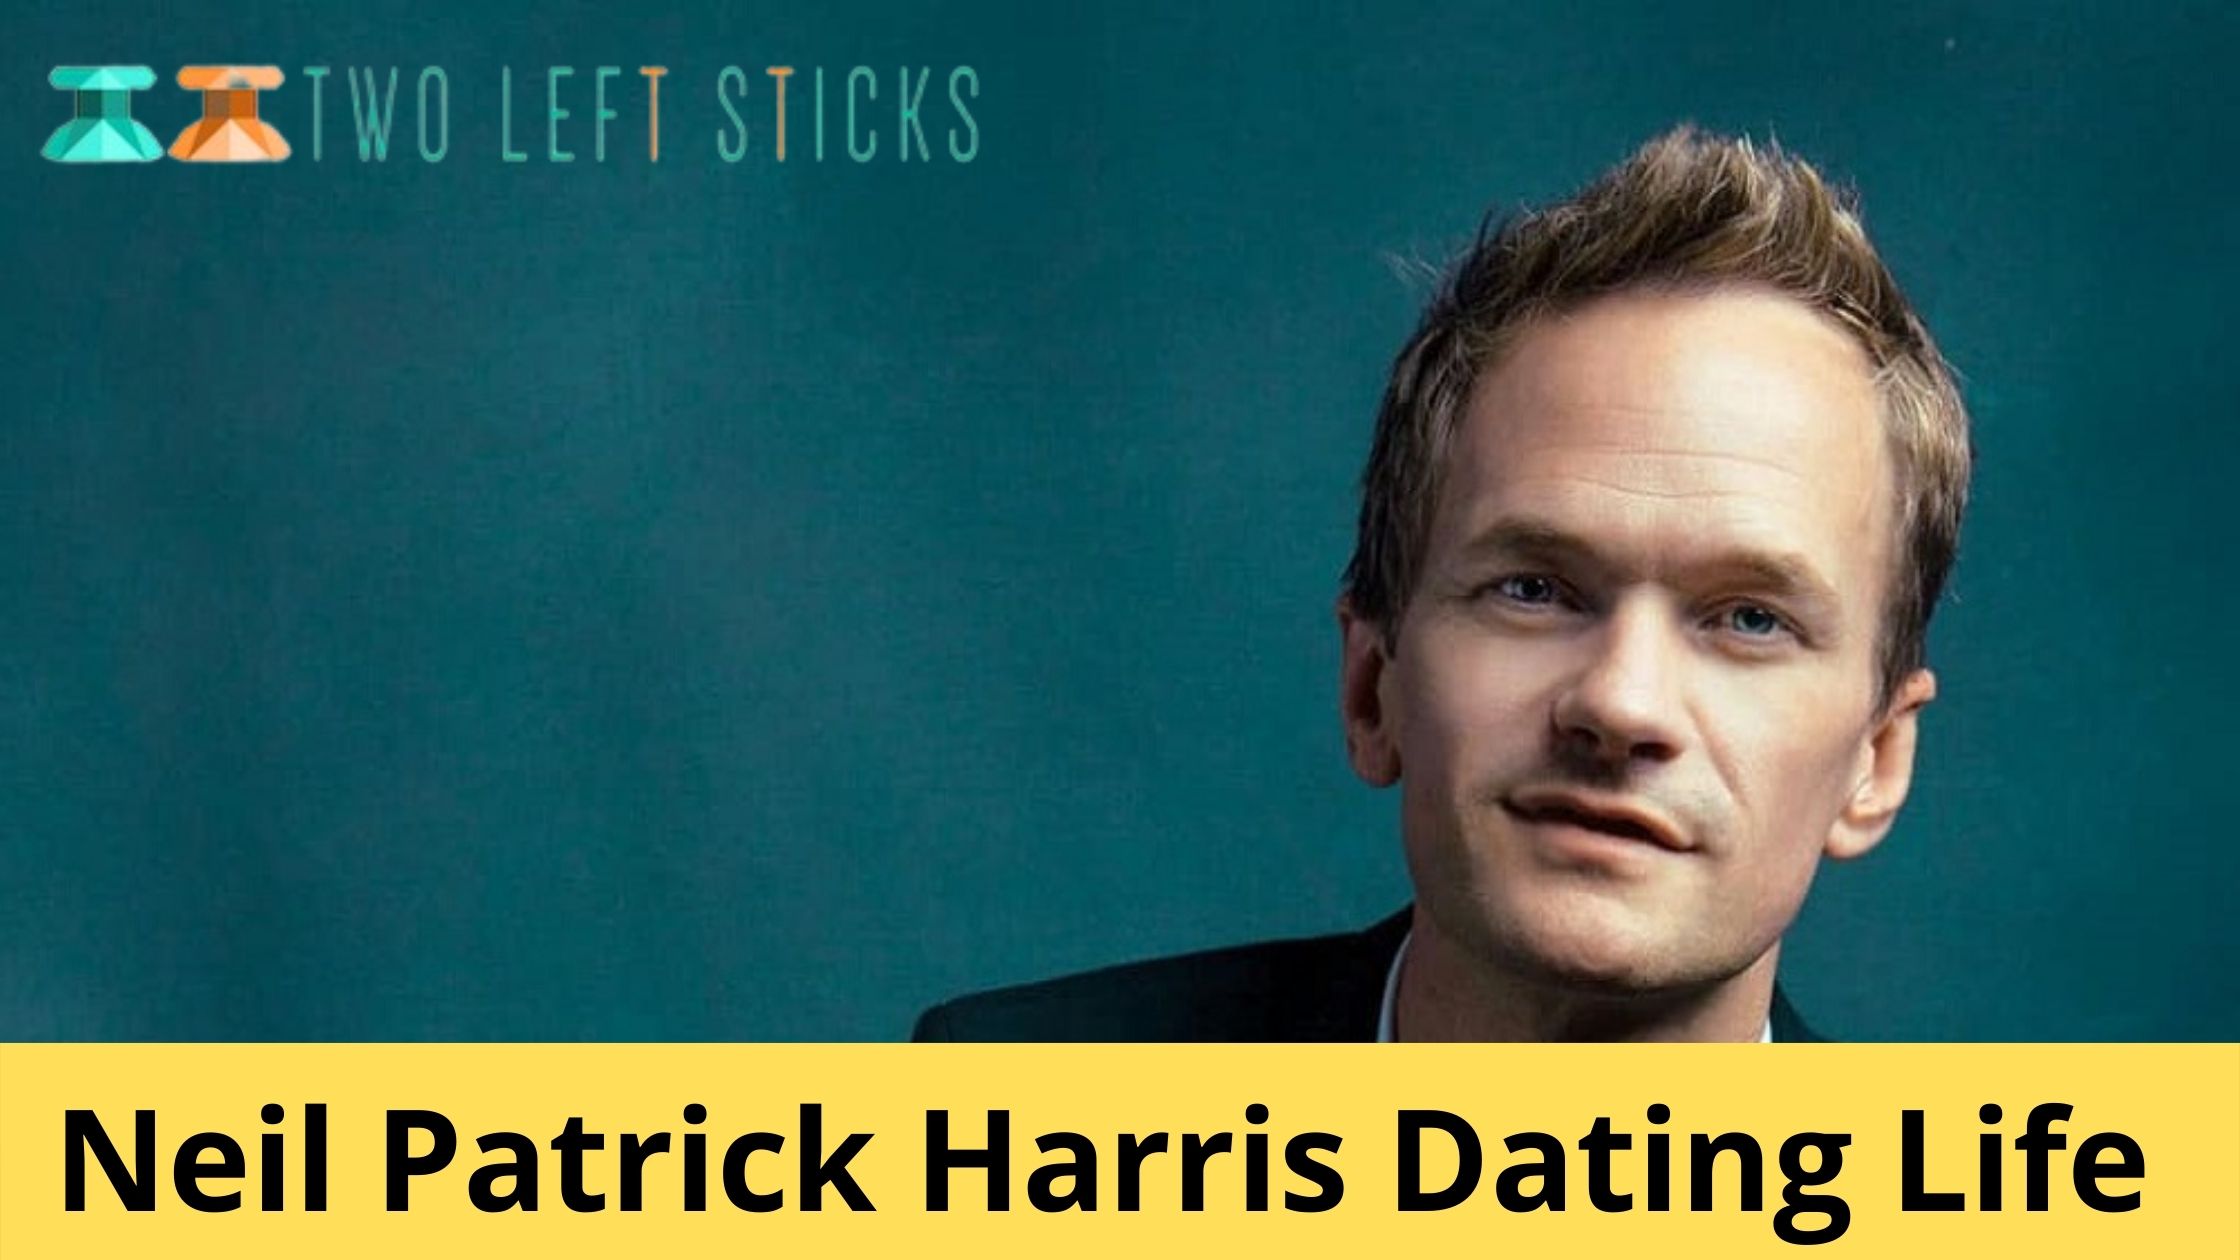 Neil-Patrick-Harris-Dating-Life-Twoleftsticks(1)